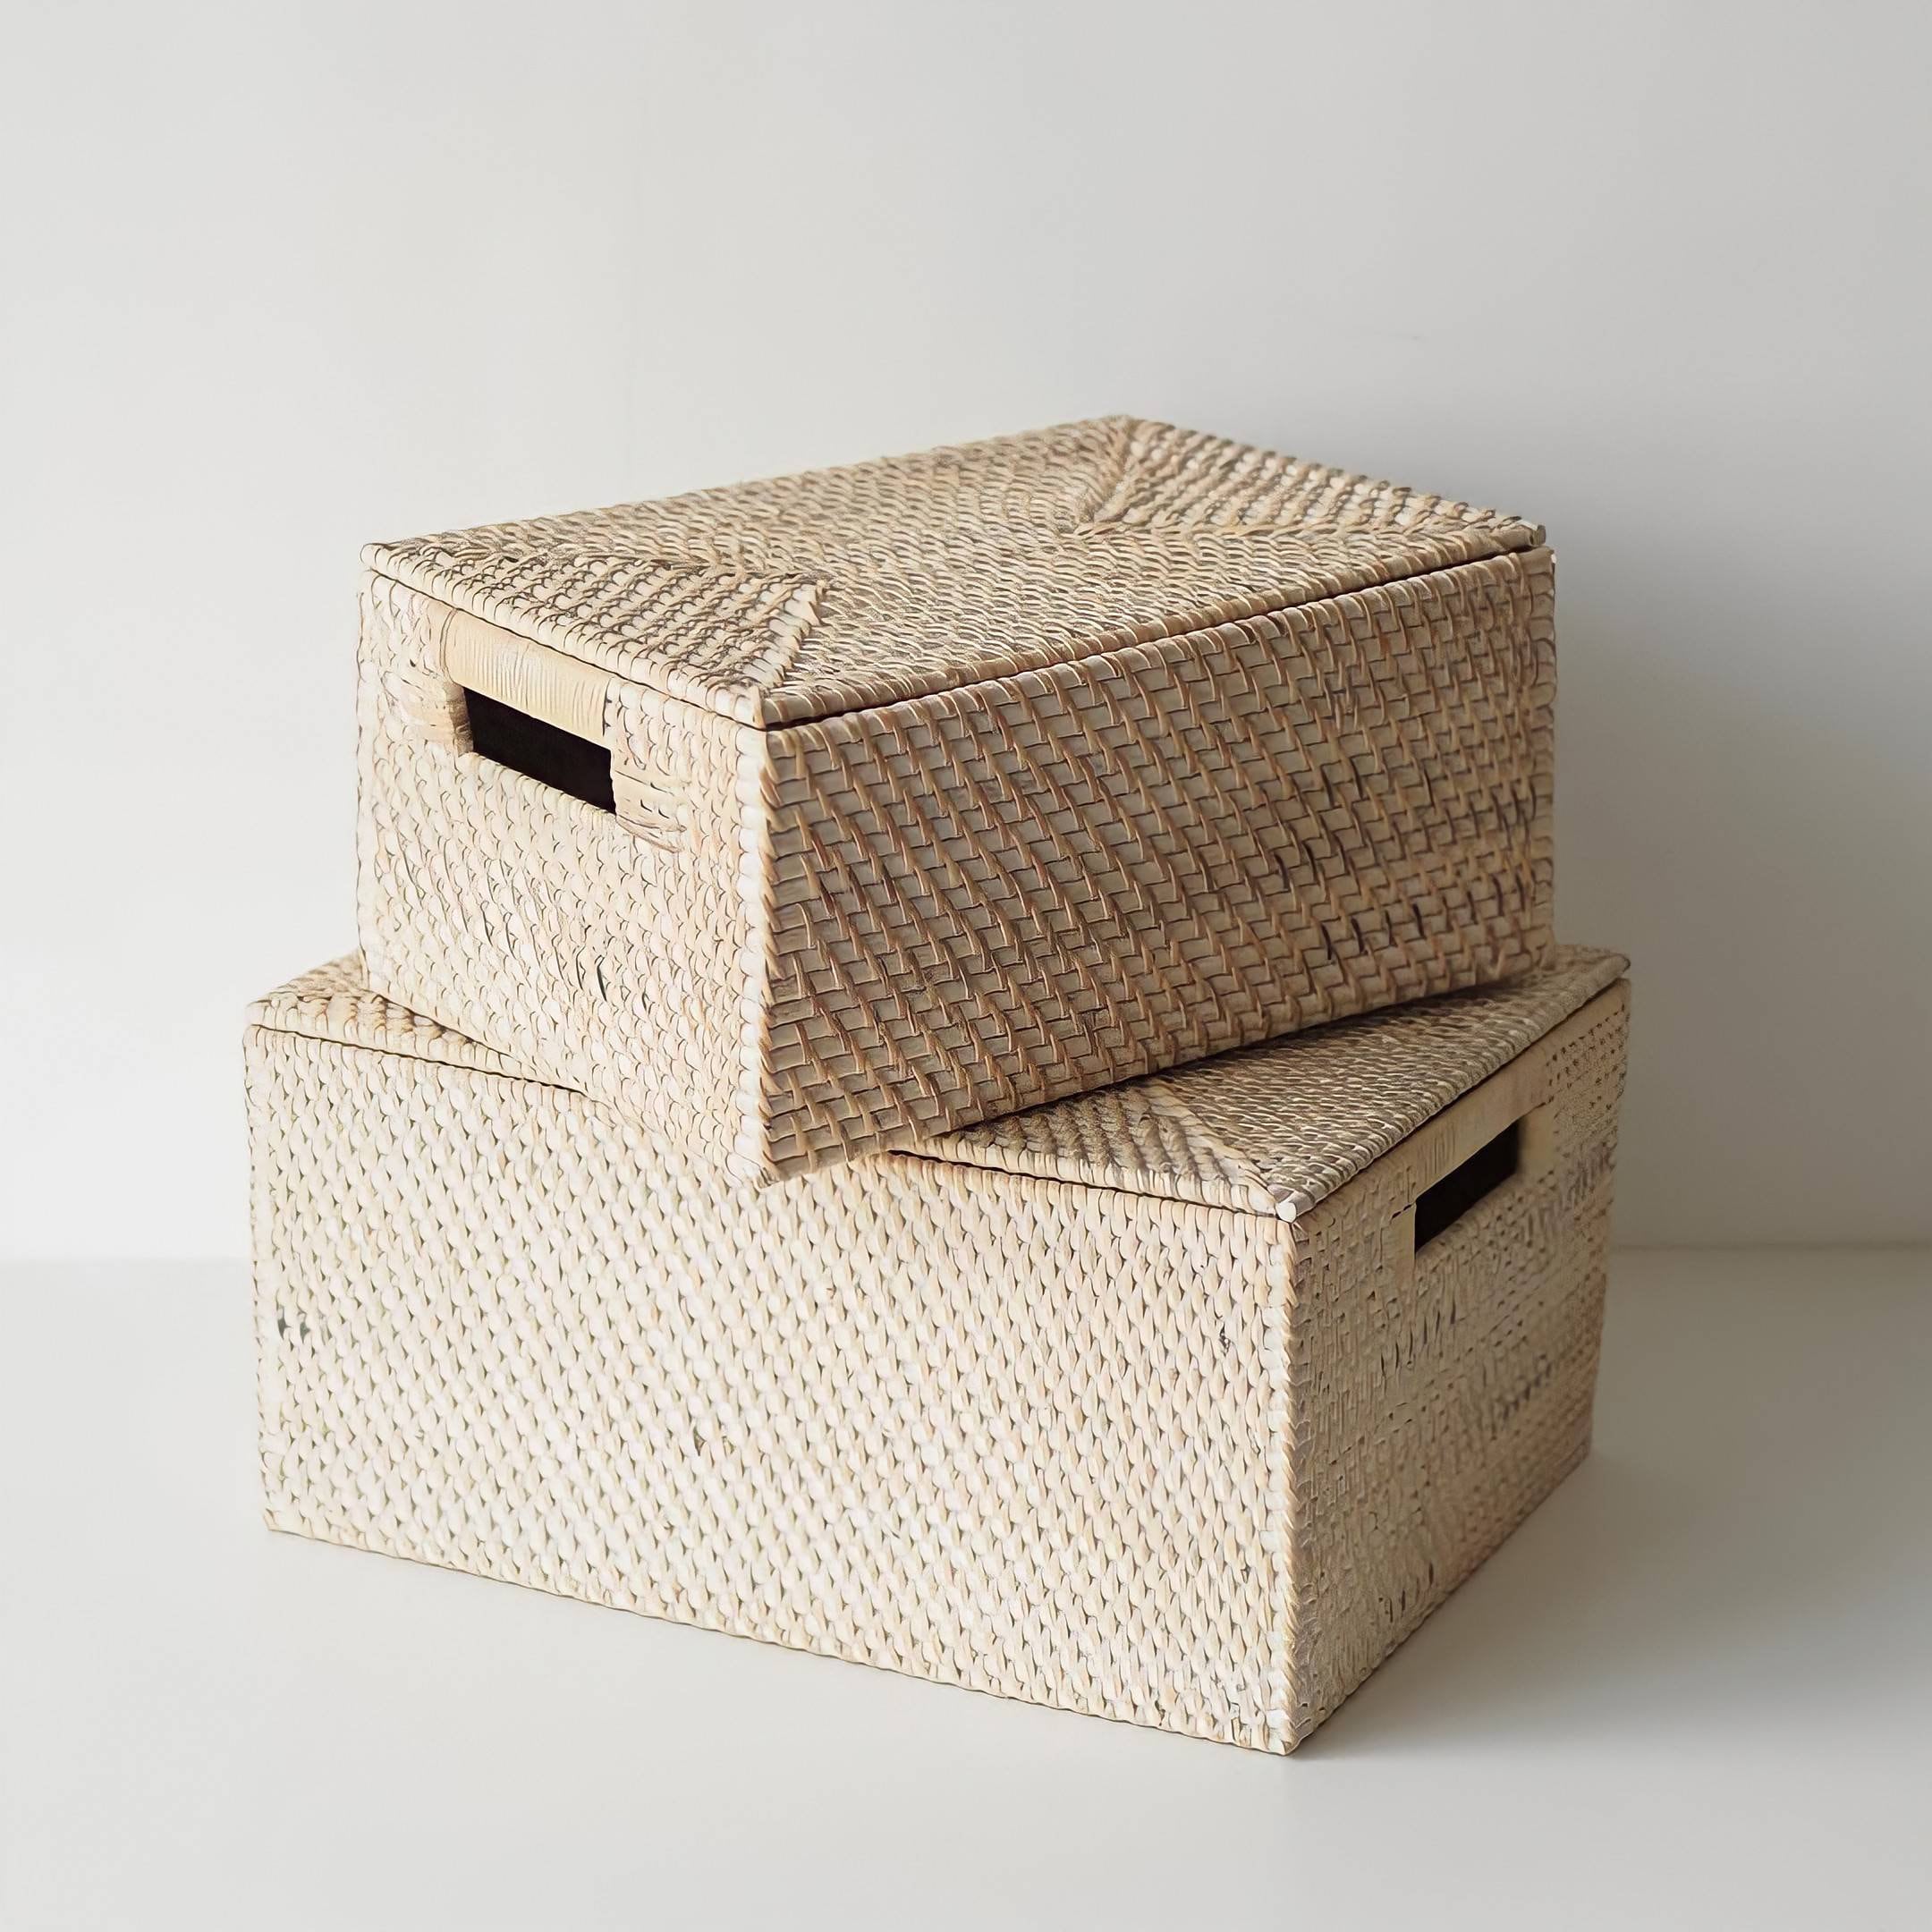 Caja de almacenamiento de mimbre tejida a mano, contenedor rectangular de  mimbre, cesta de alimentos para